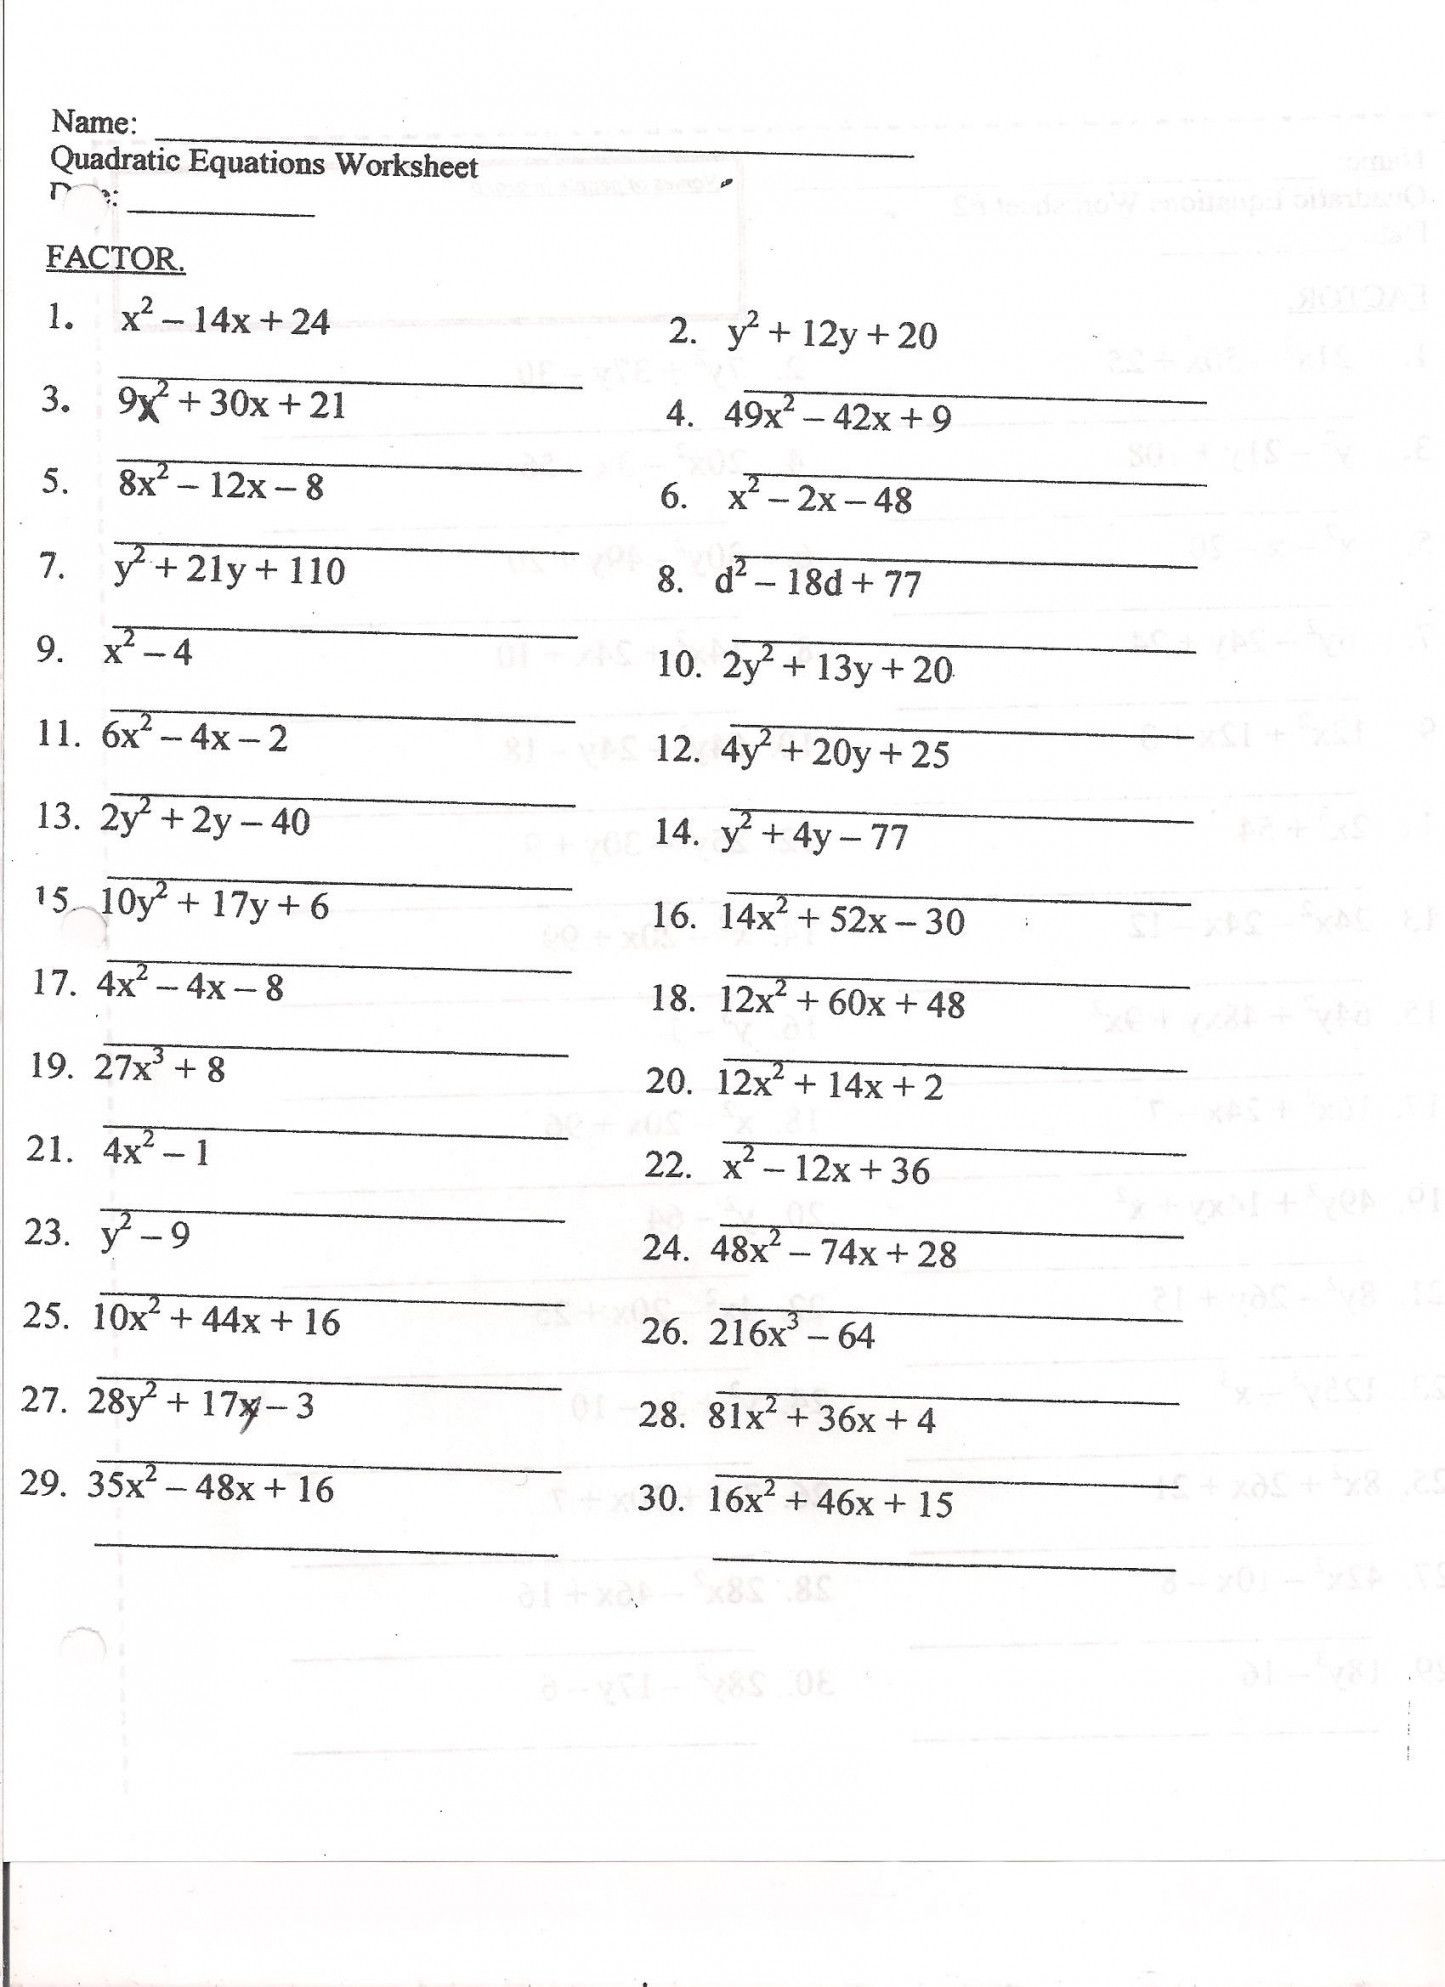 Factoring Worksheet Algebra 1 32 Factoring Pletely Worksheet with Answers Worksheet